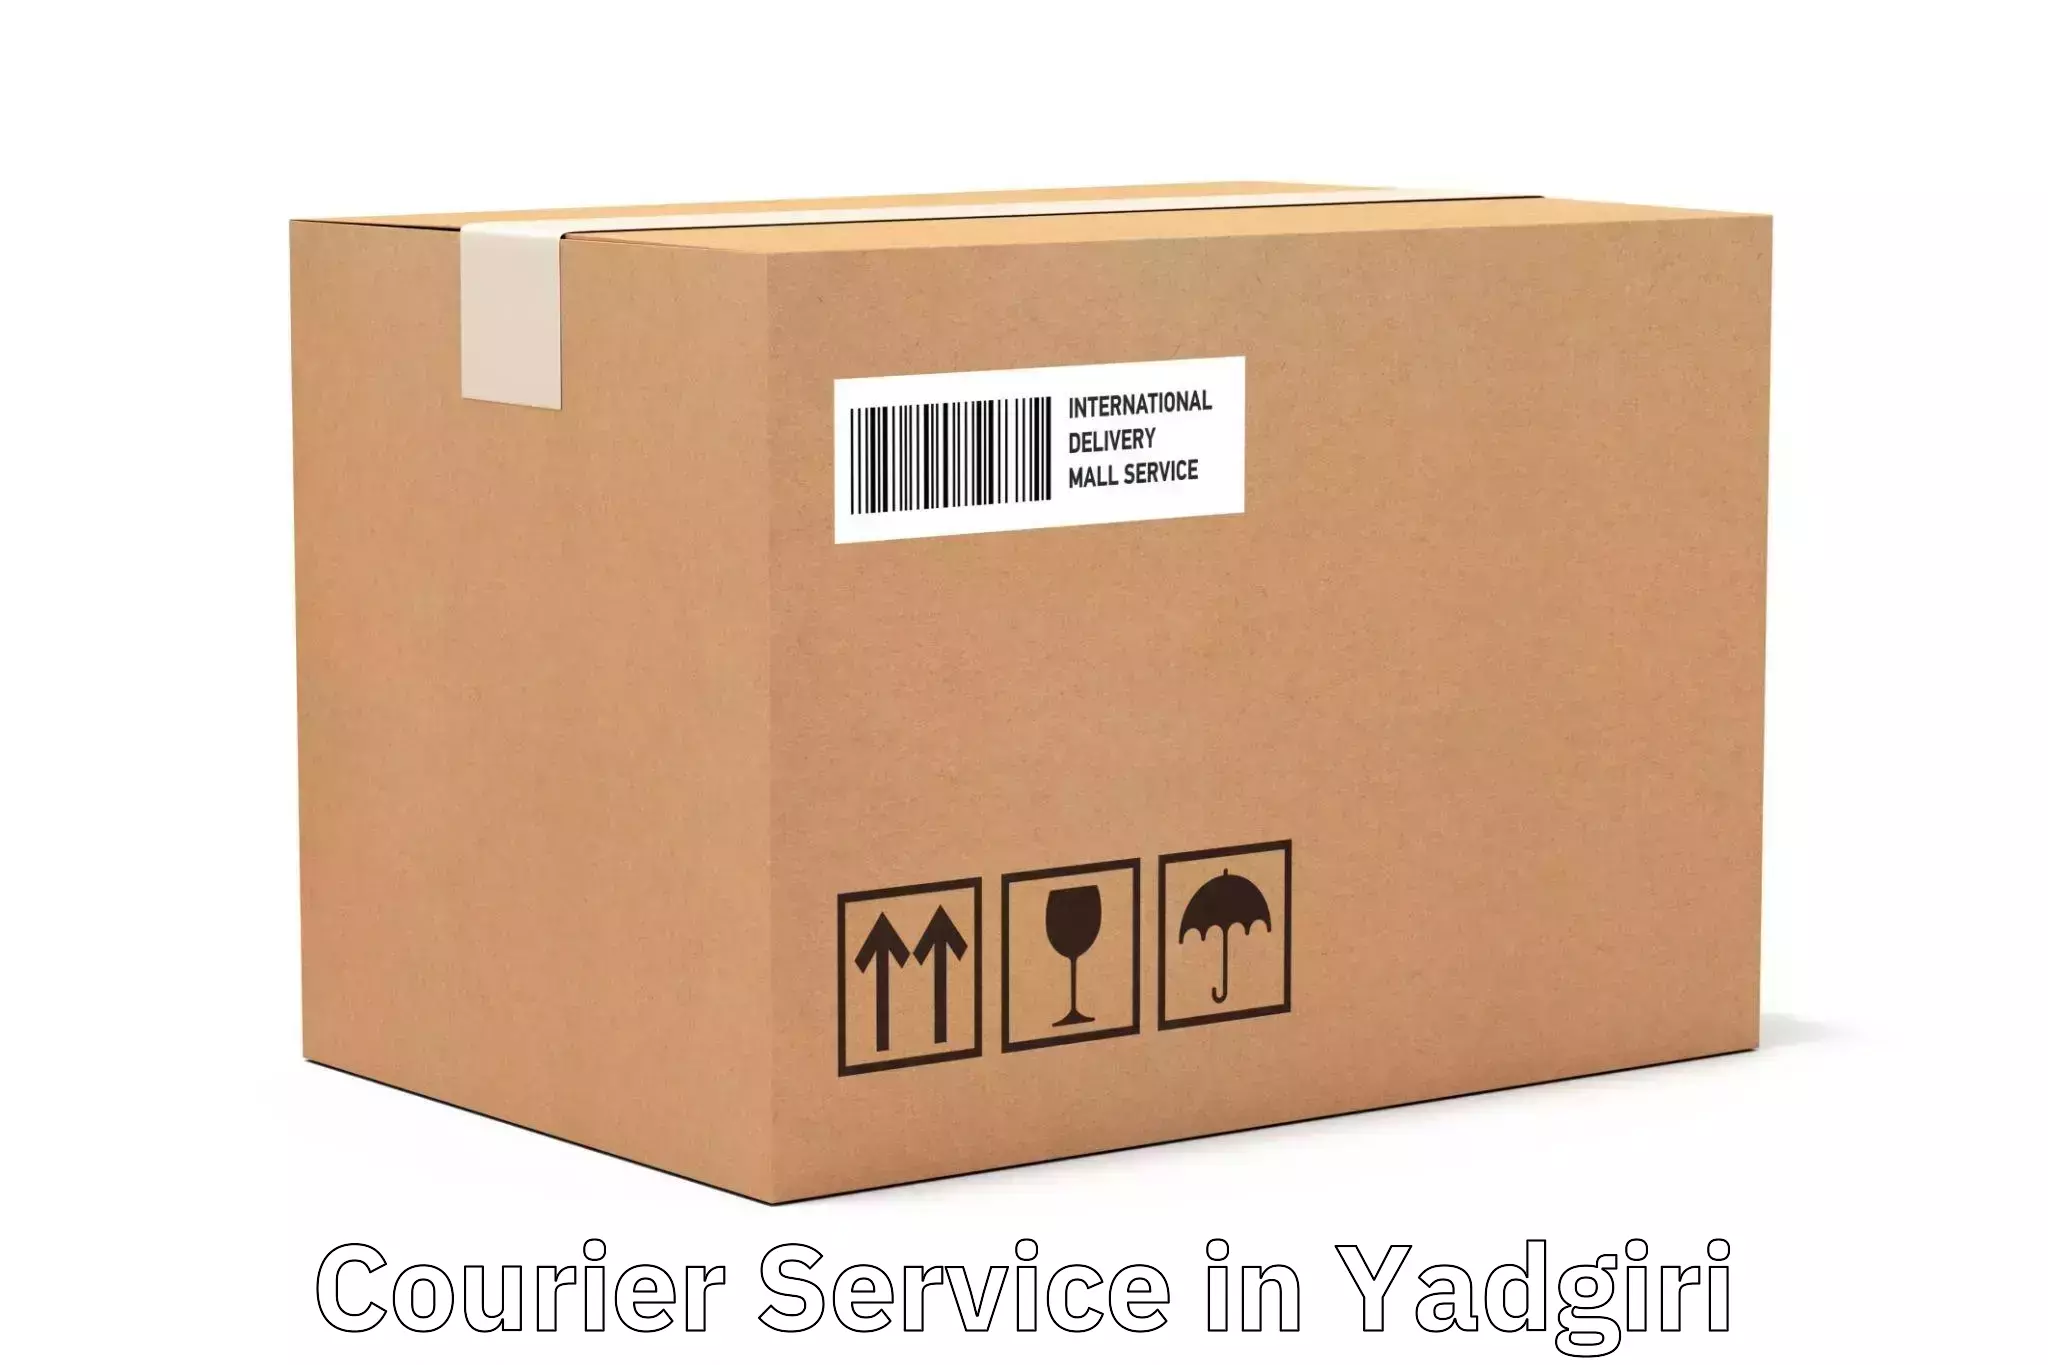 Weekend courier service in Yadgiri